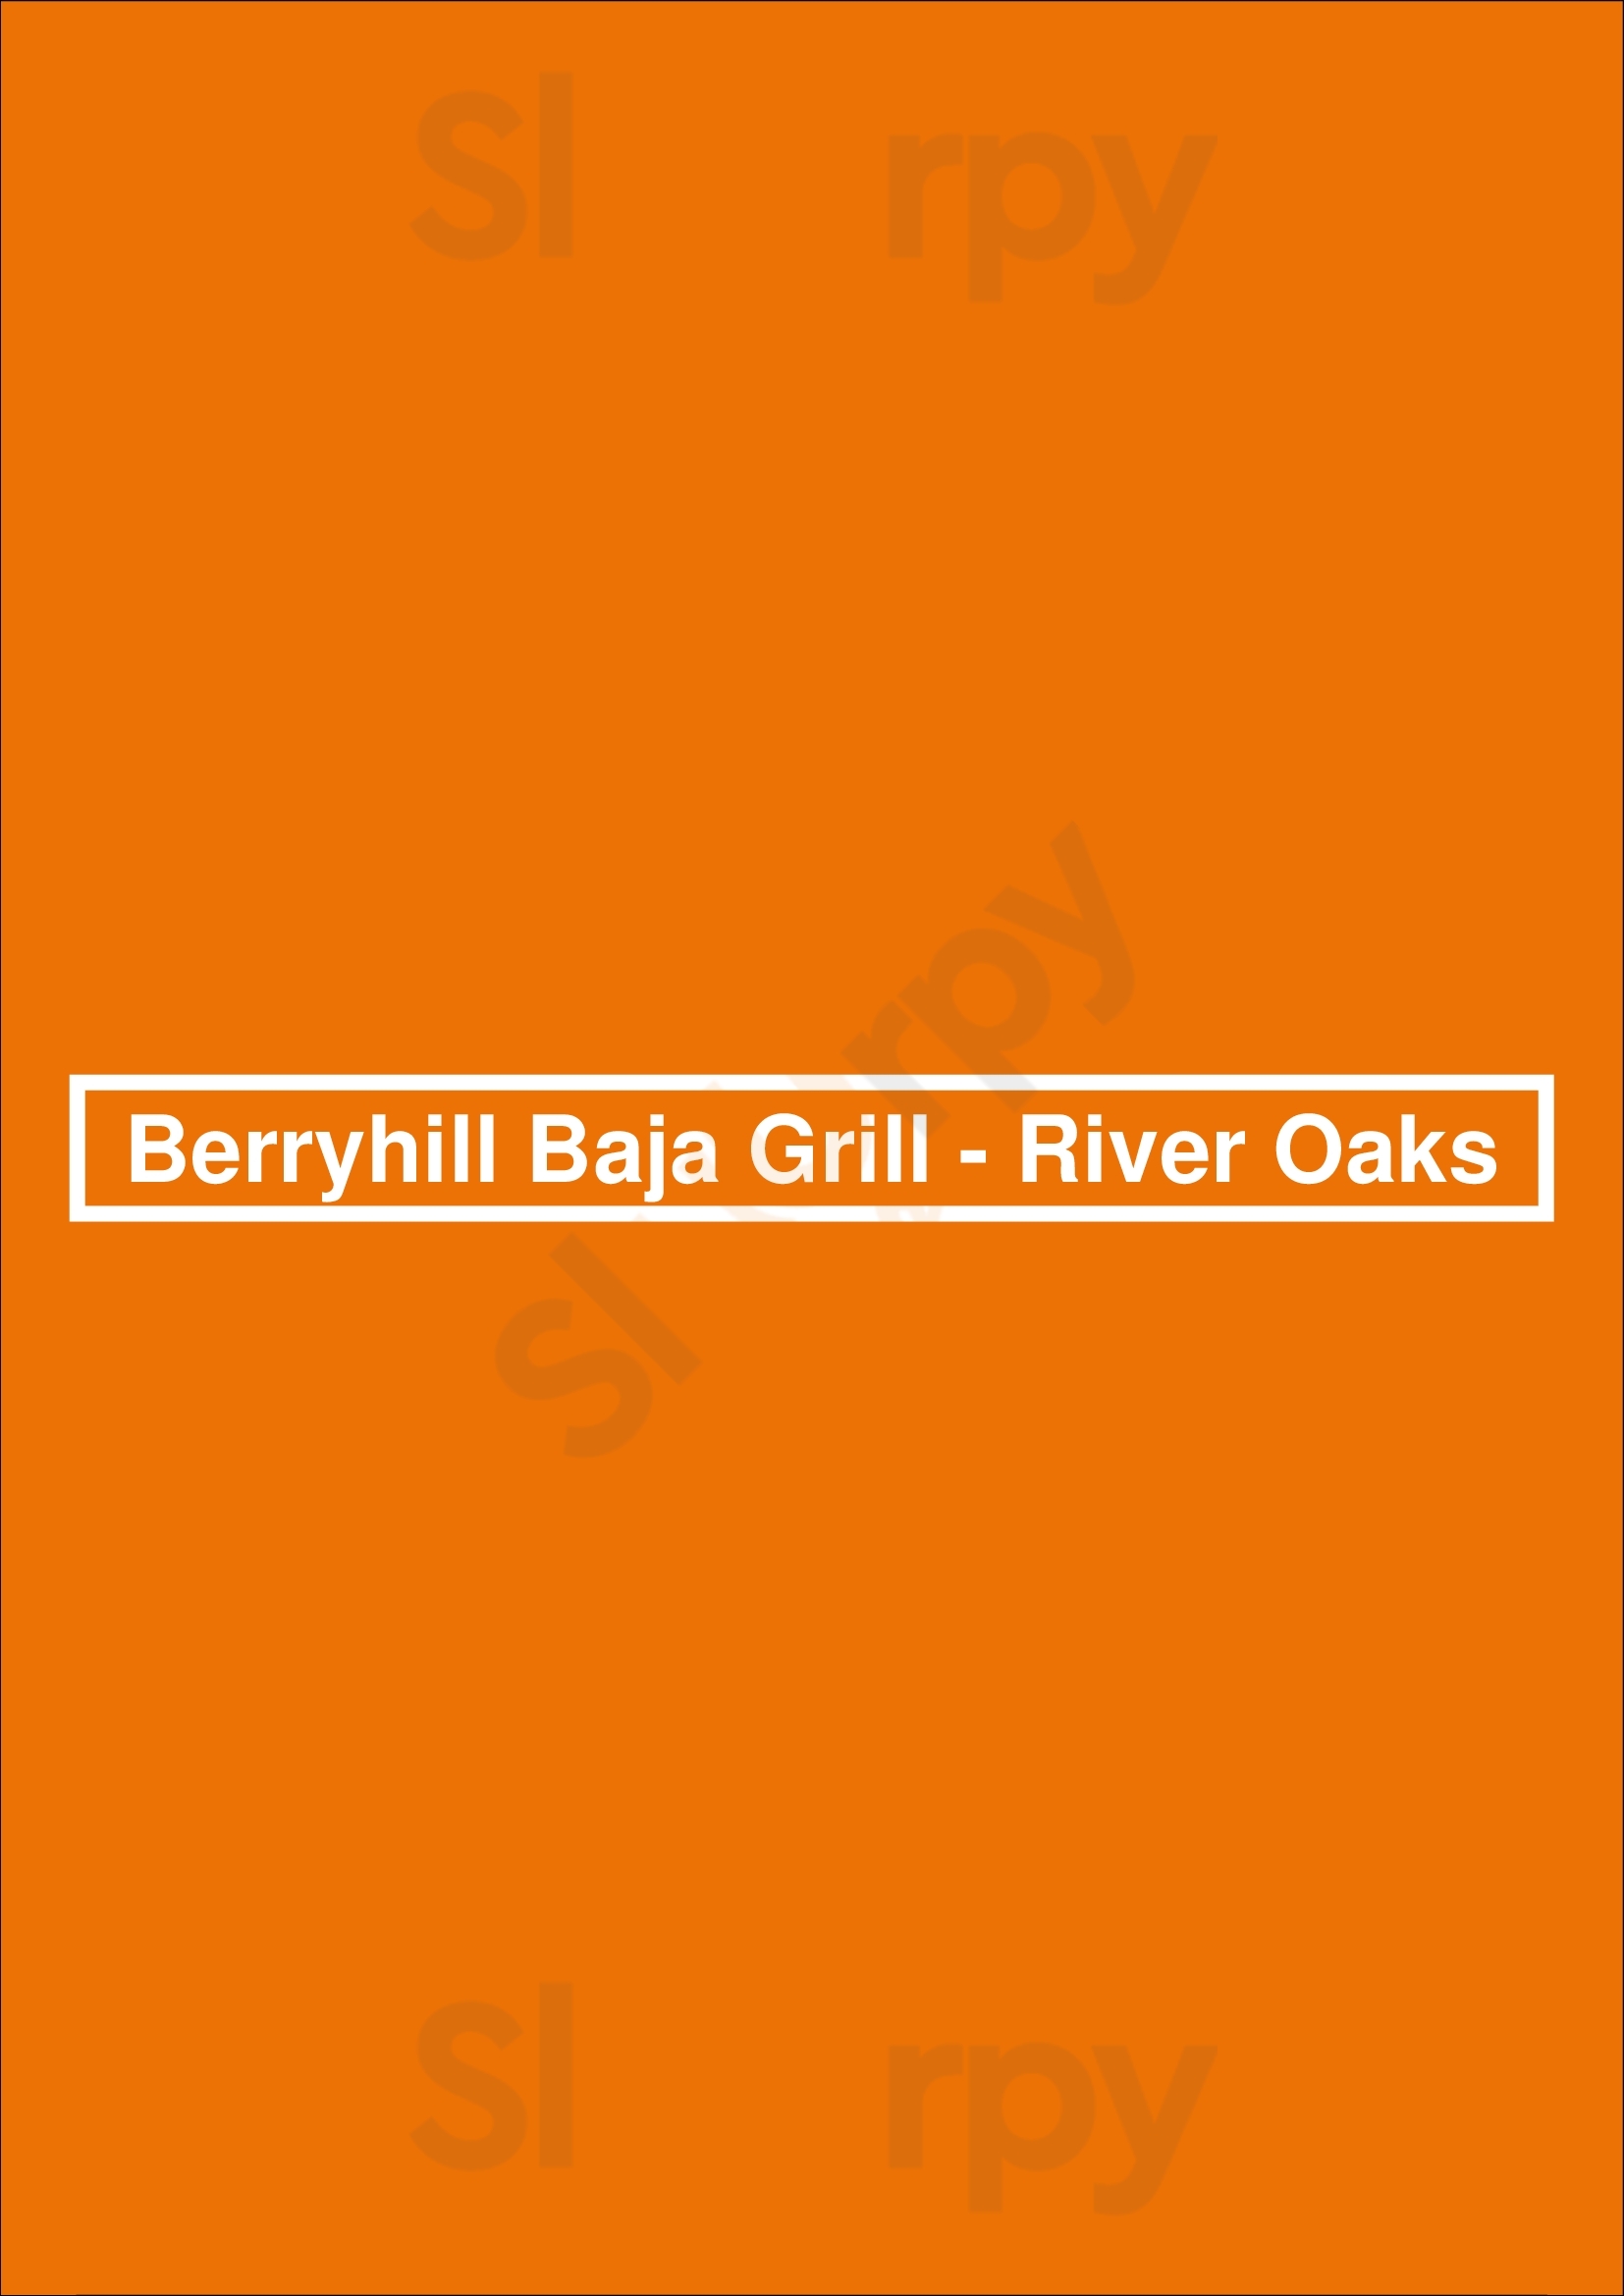 Berryhill Baja Grill - River Oaks Houston Menu - 1